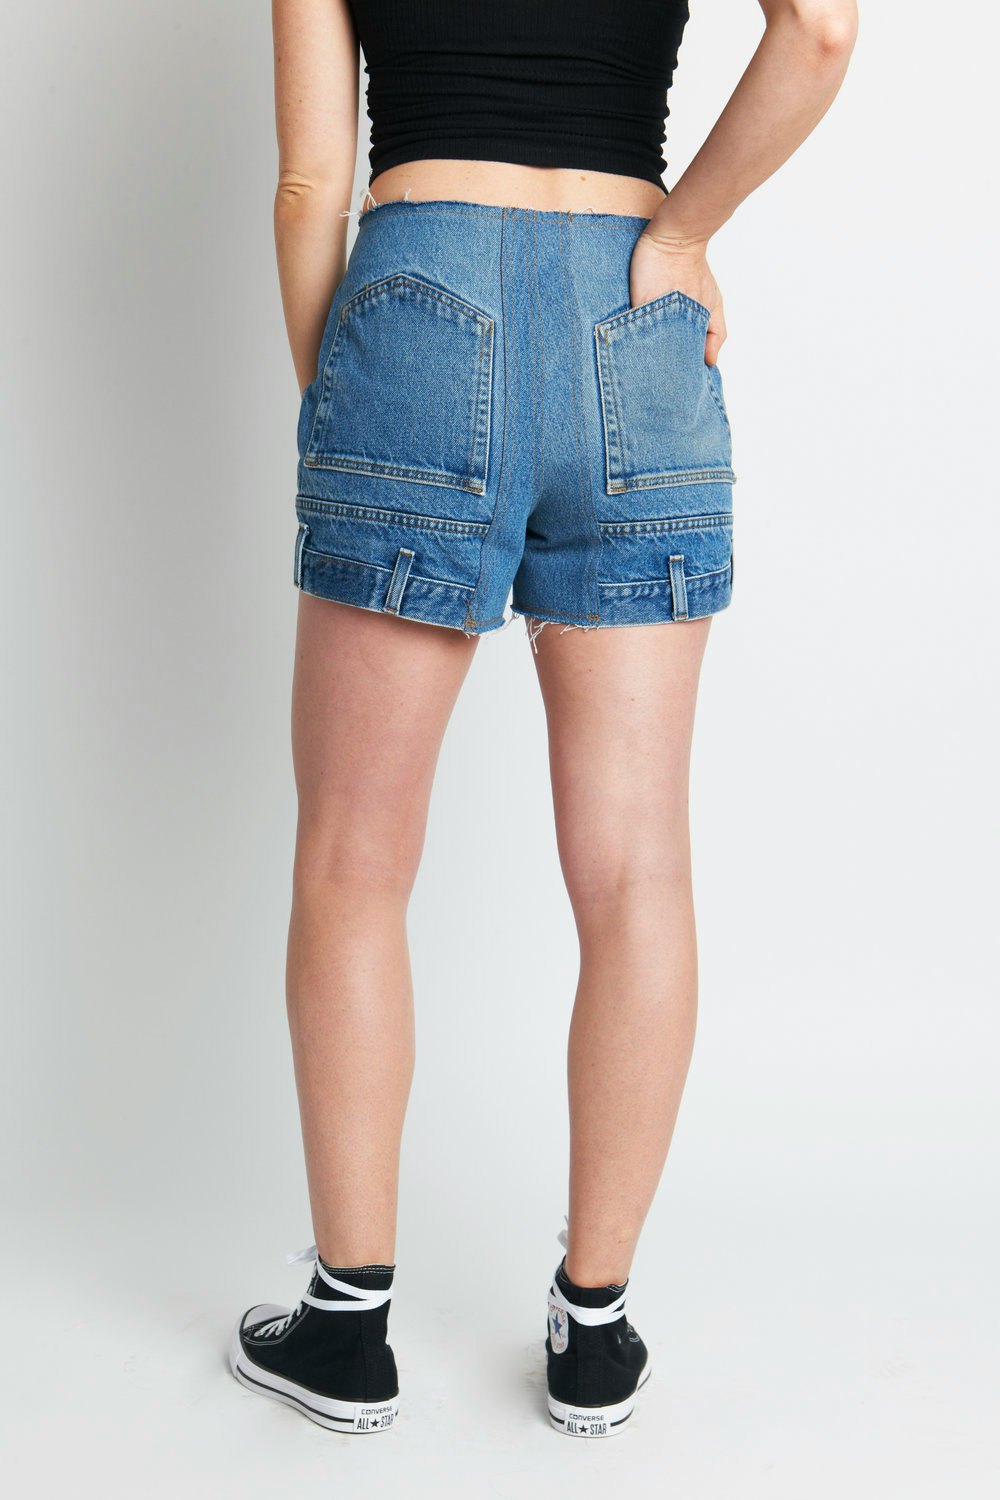 ugly jean shorts